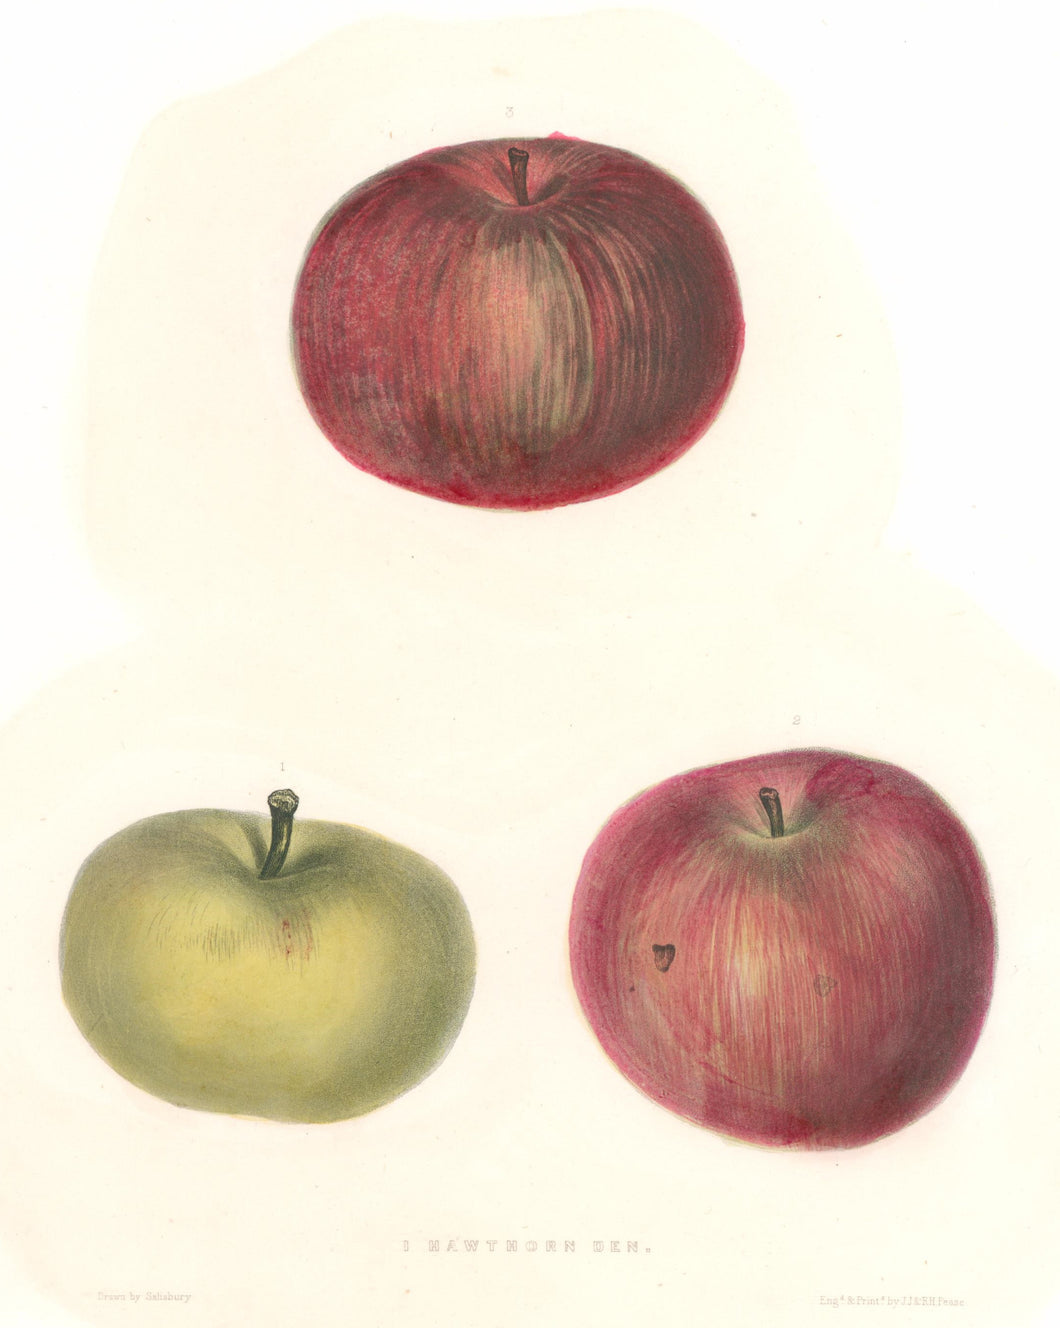 Salisbury “Hawthorn Ben”  [apple]  Plate 36